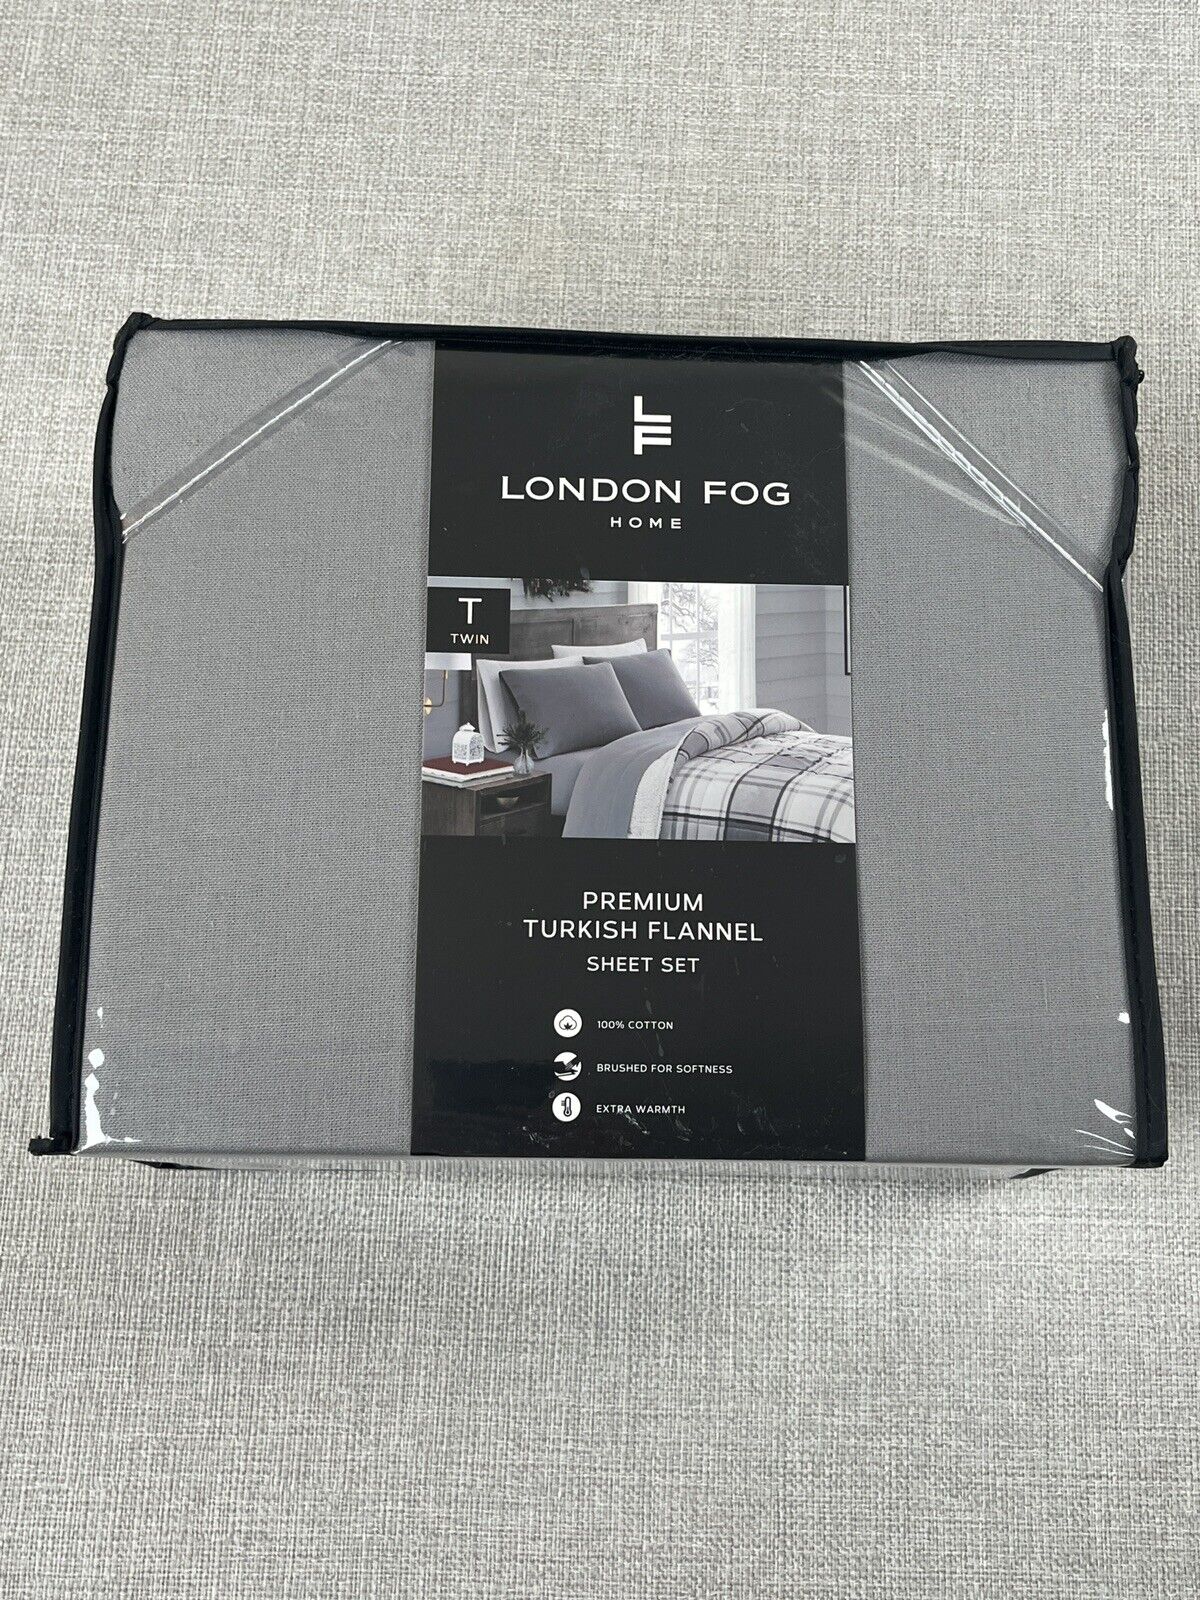 London Fog Home Premium Turkish Flannel Sheet Set, Gray, Twin Size New Soft